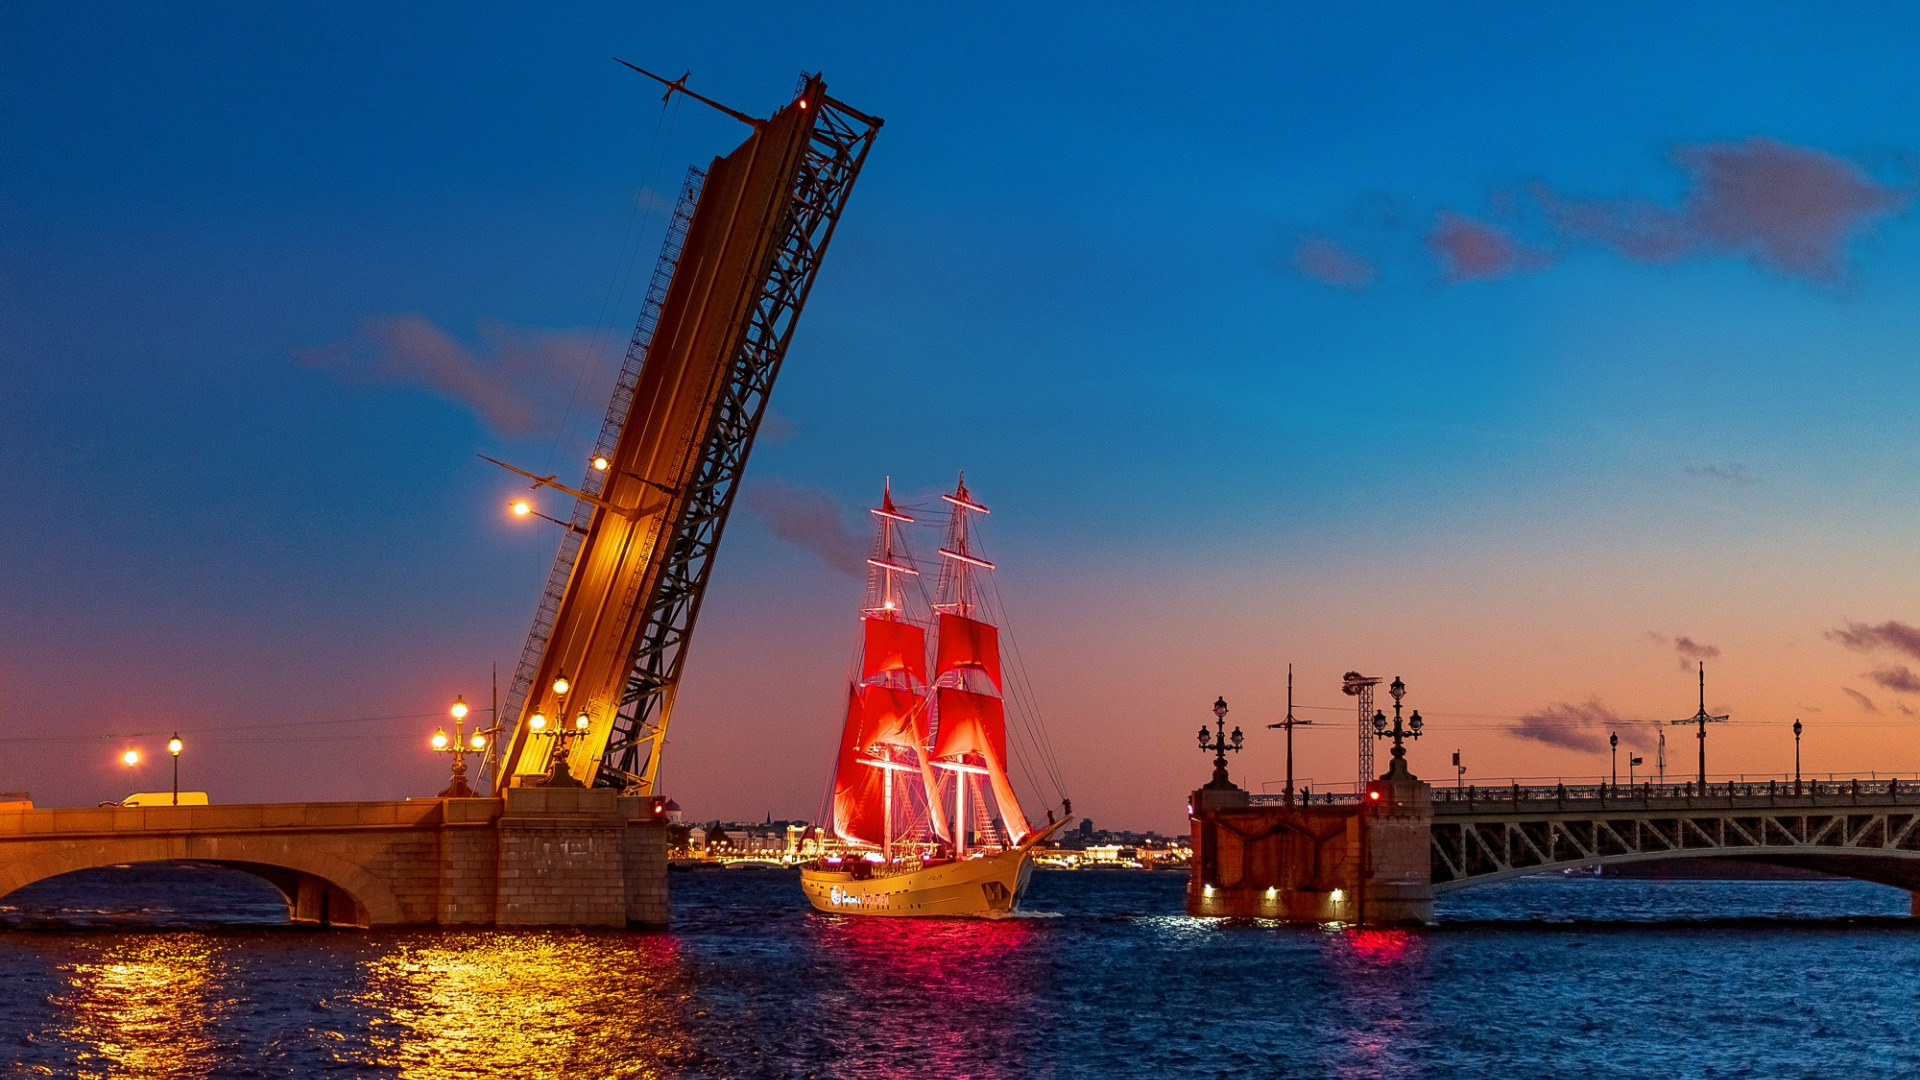 General 1920x1080 ship water bridge St. Petersburg Russia evening lights river sailing ship open Scarlet Sails